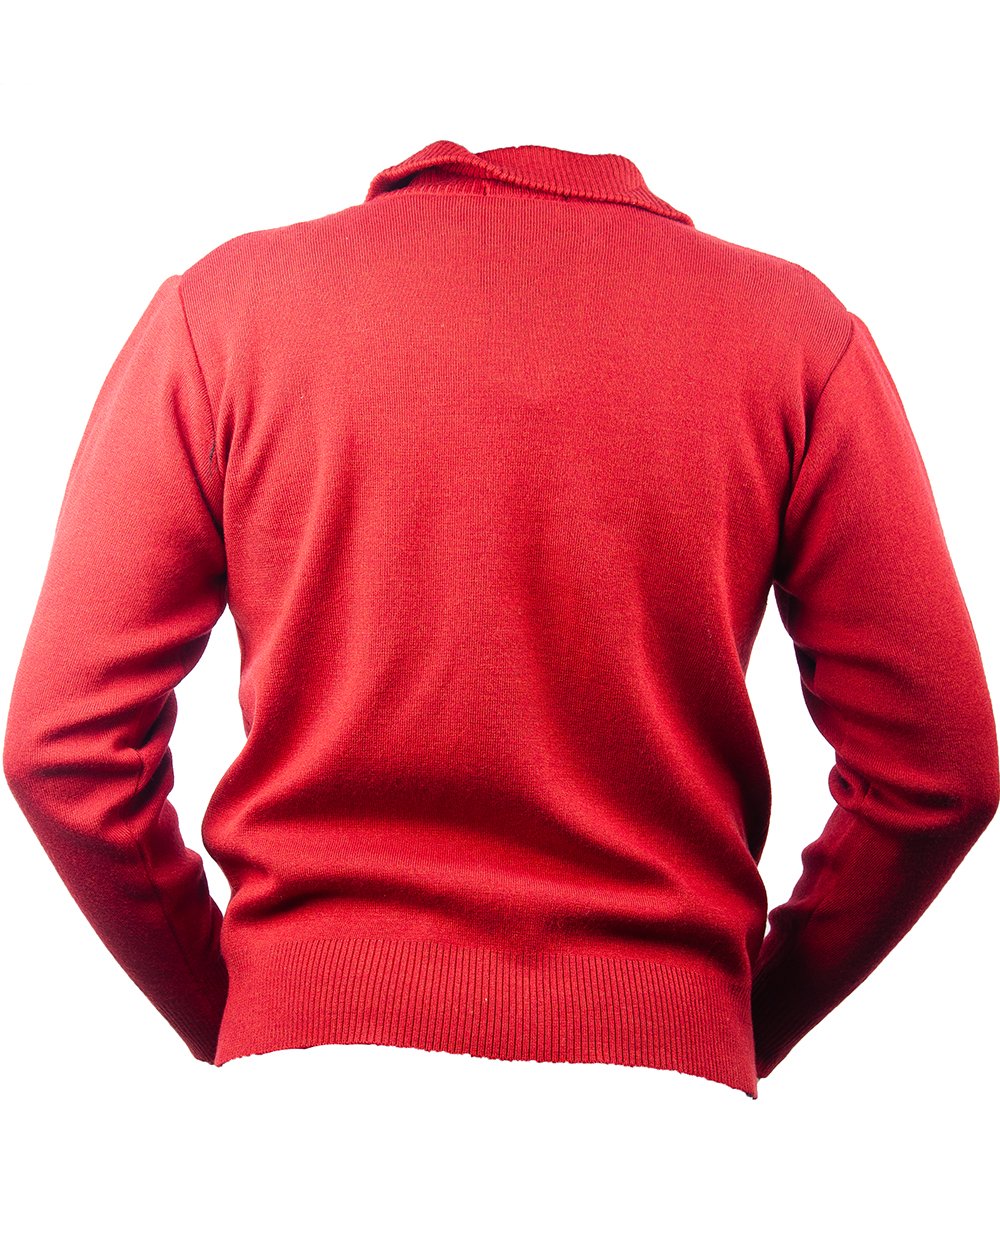 Мужская красная кофта. Красный джемпер мужской. Красная водолазка мужская. Красный свитер мужской. Красная кофта.